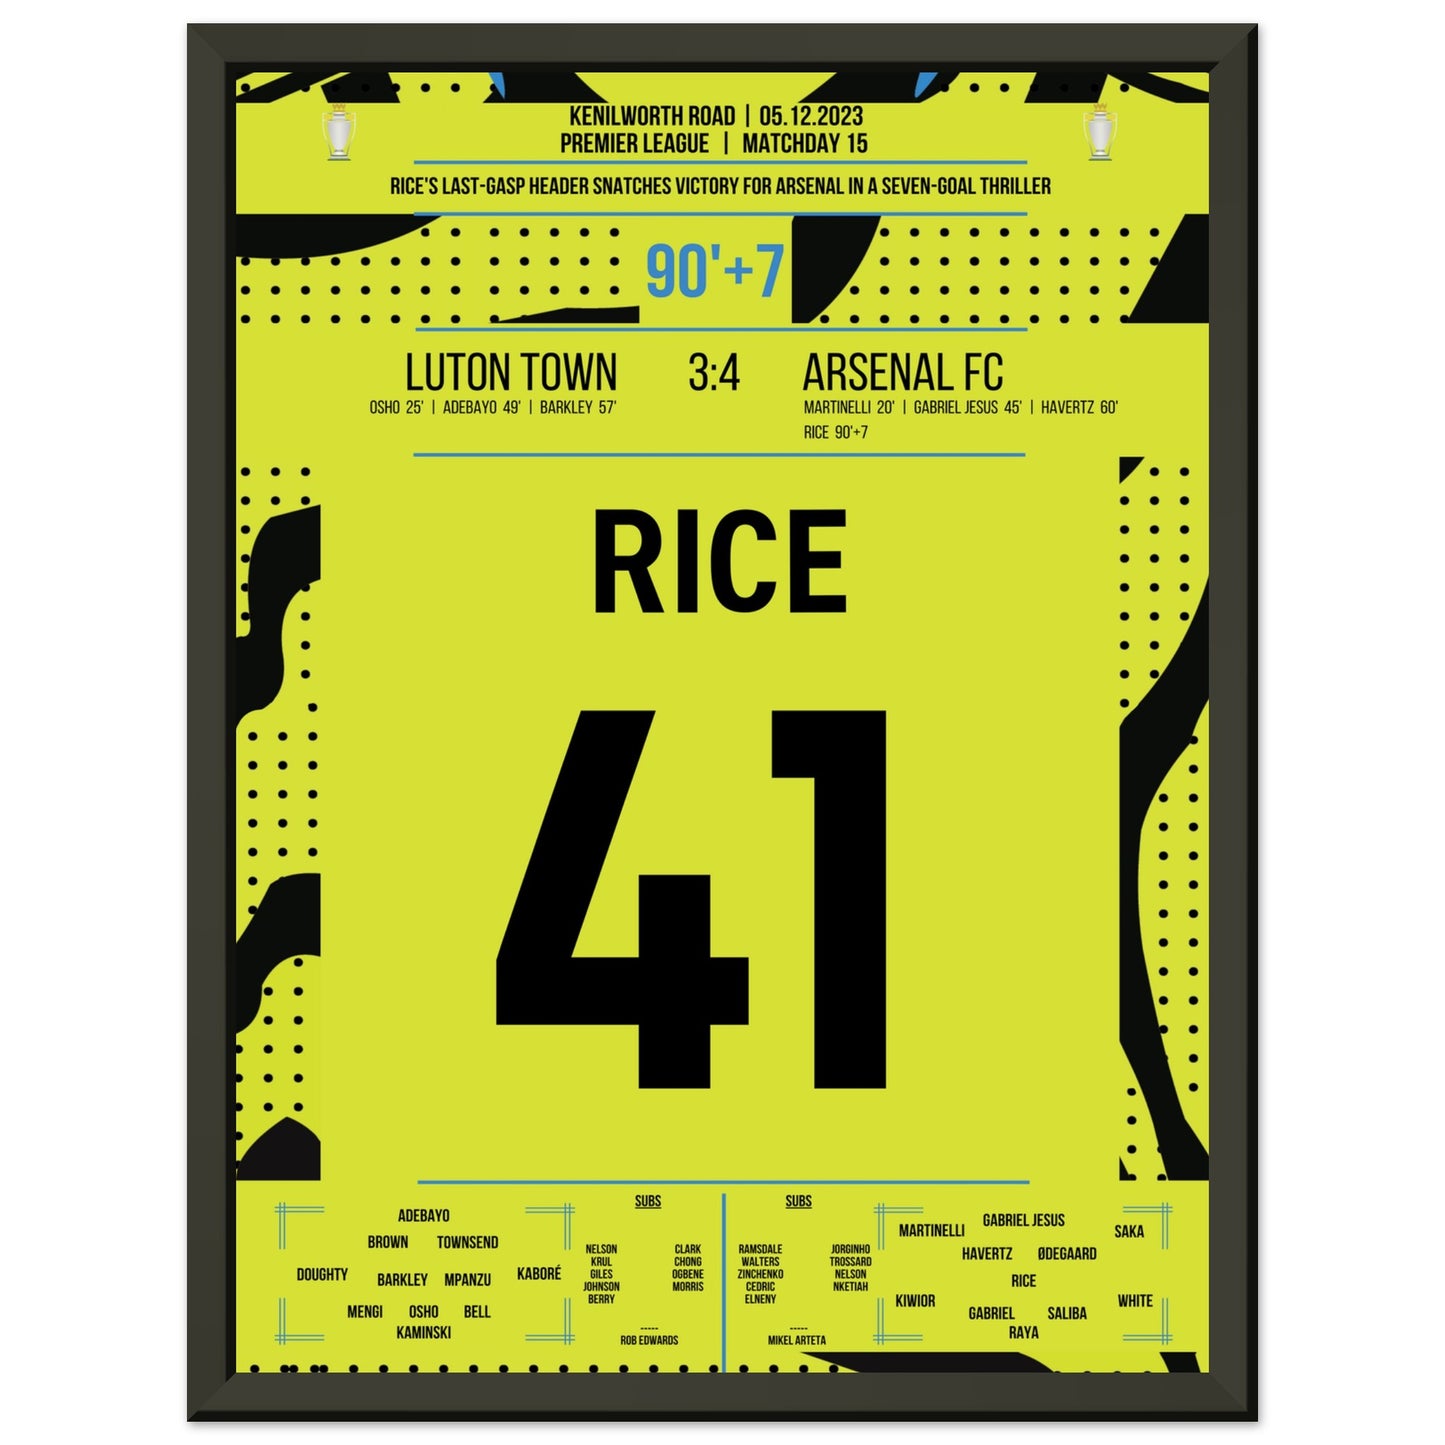 Rice köpft Arsenal in letzter Sekunde zum Auswärtssieg 30x40-cm-12x16-Schwarzer-Aluminiumrahmen